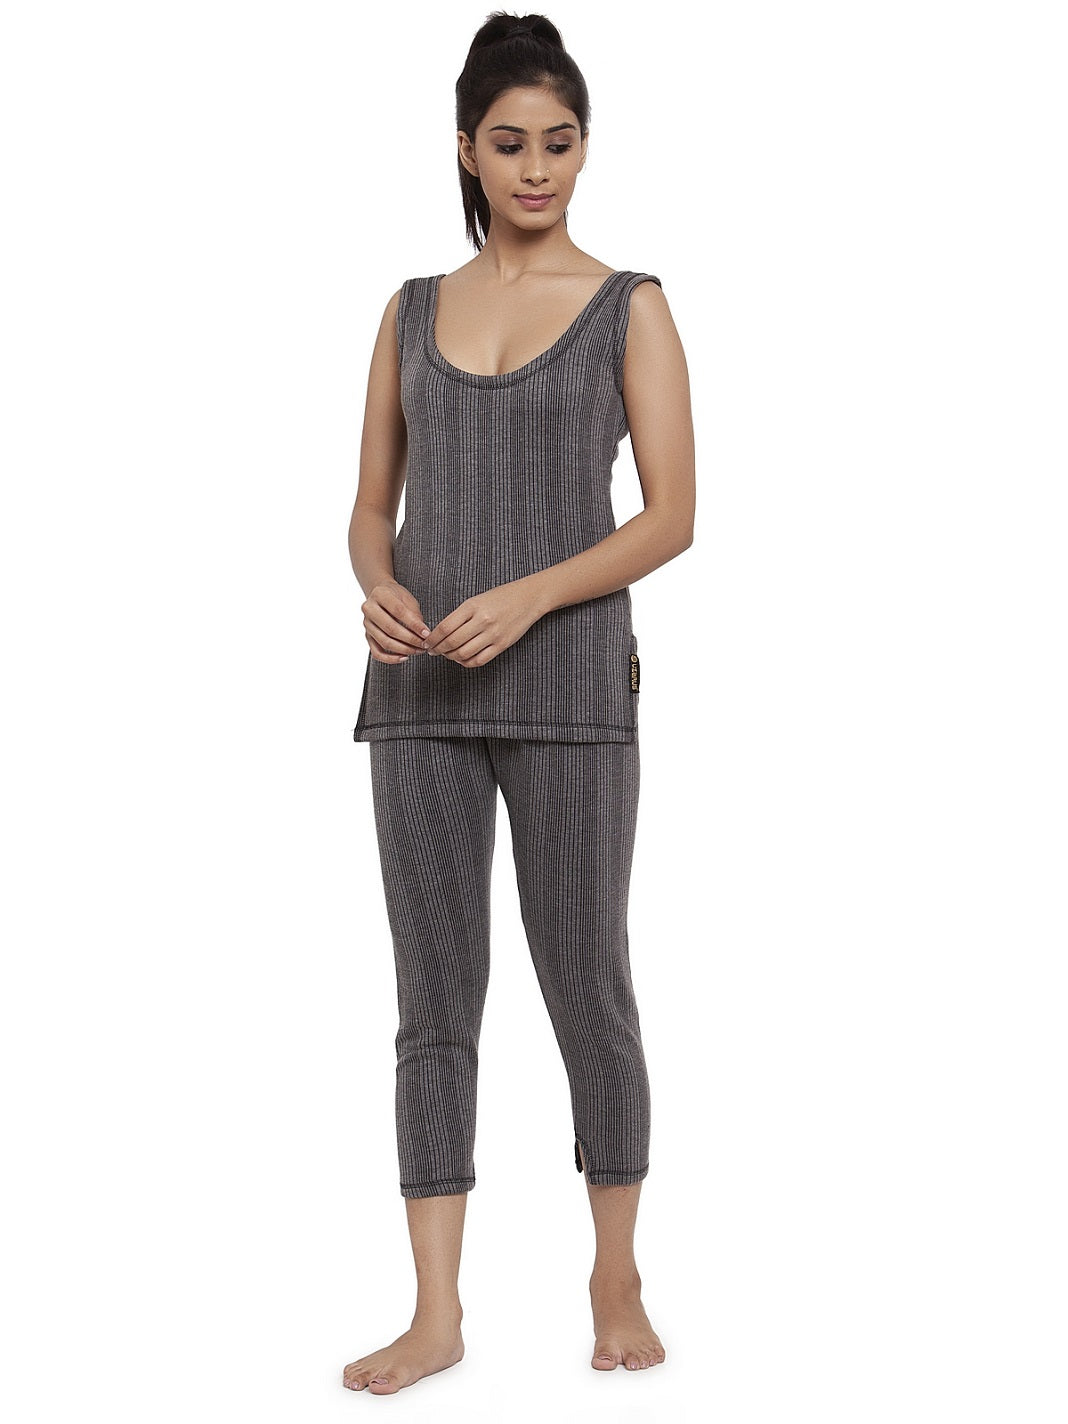 Buy Jairy Shop Thermal Wear for Women Thermal Top Sleeveless (Grey